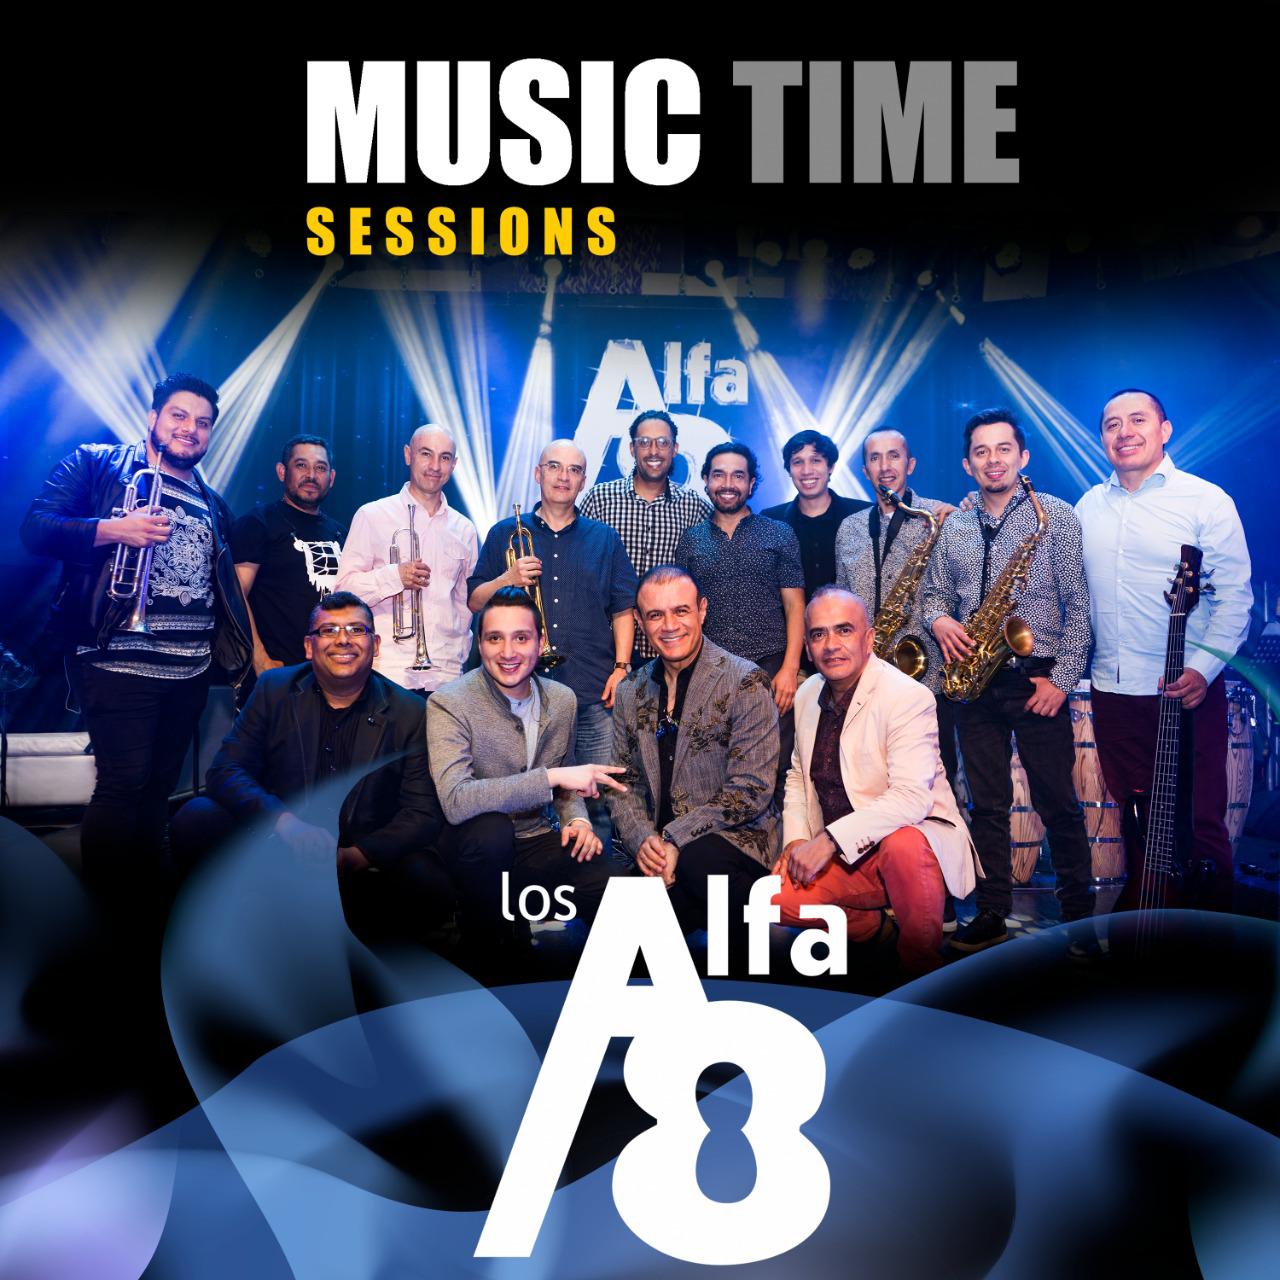 LOS ALFA 8 PRESENTARON SU NUEVO ALBUM, “MUSIC TIME SESSIONS”.